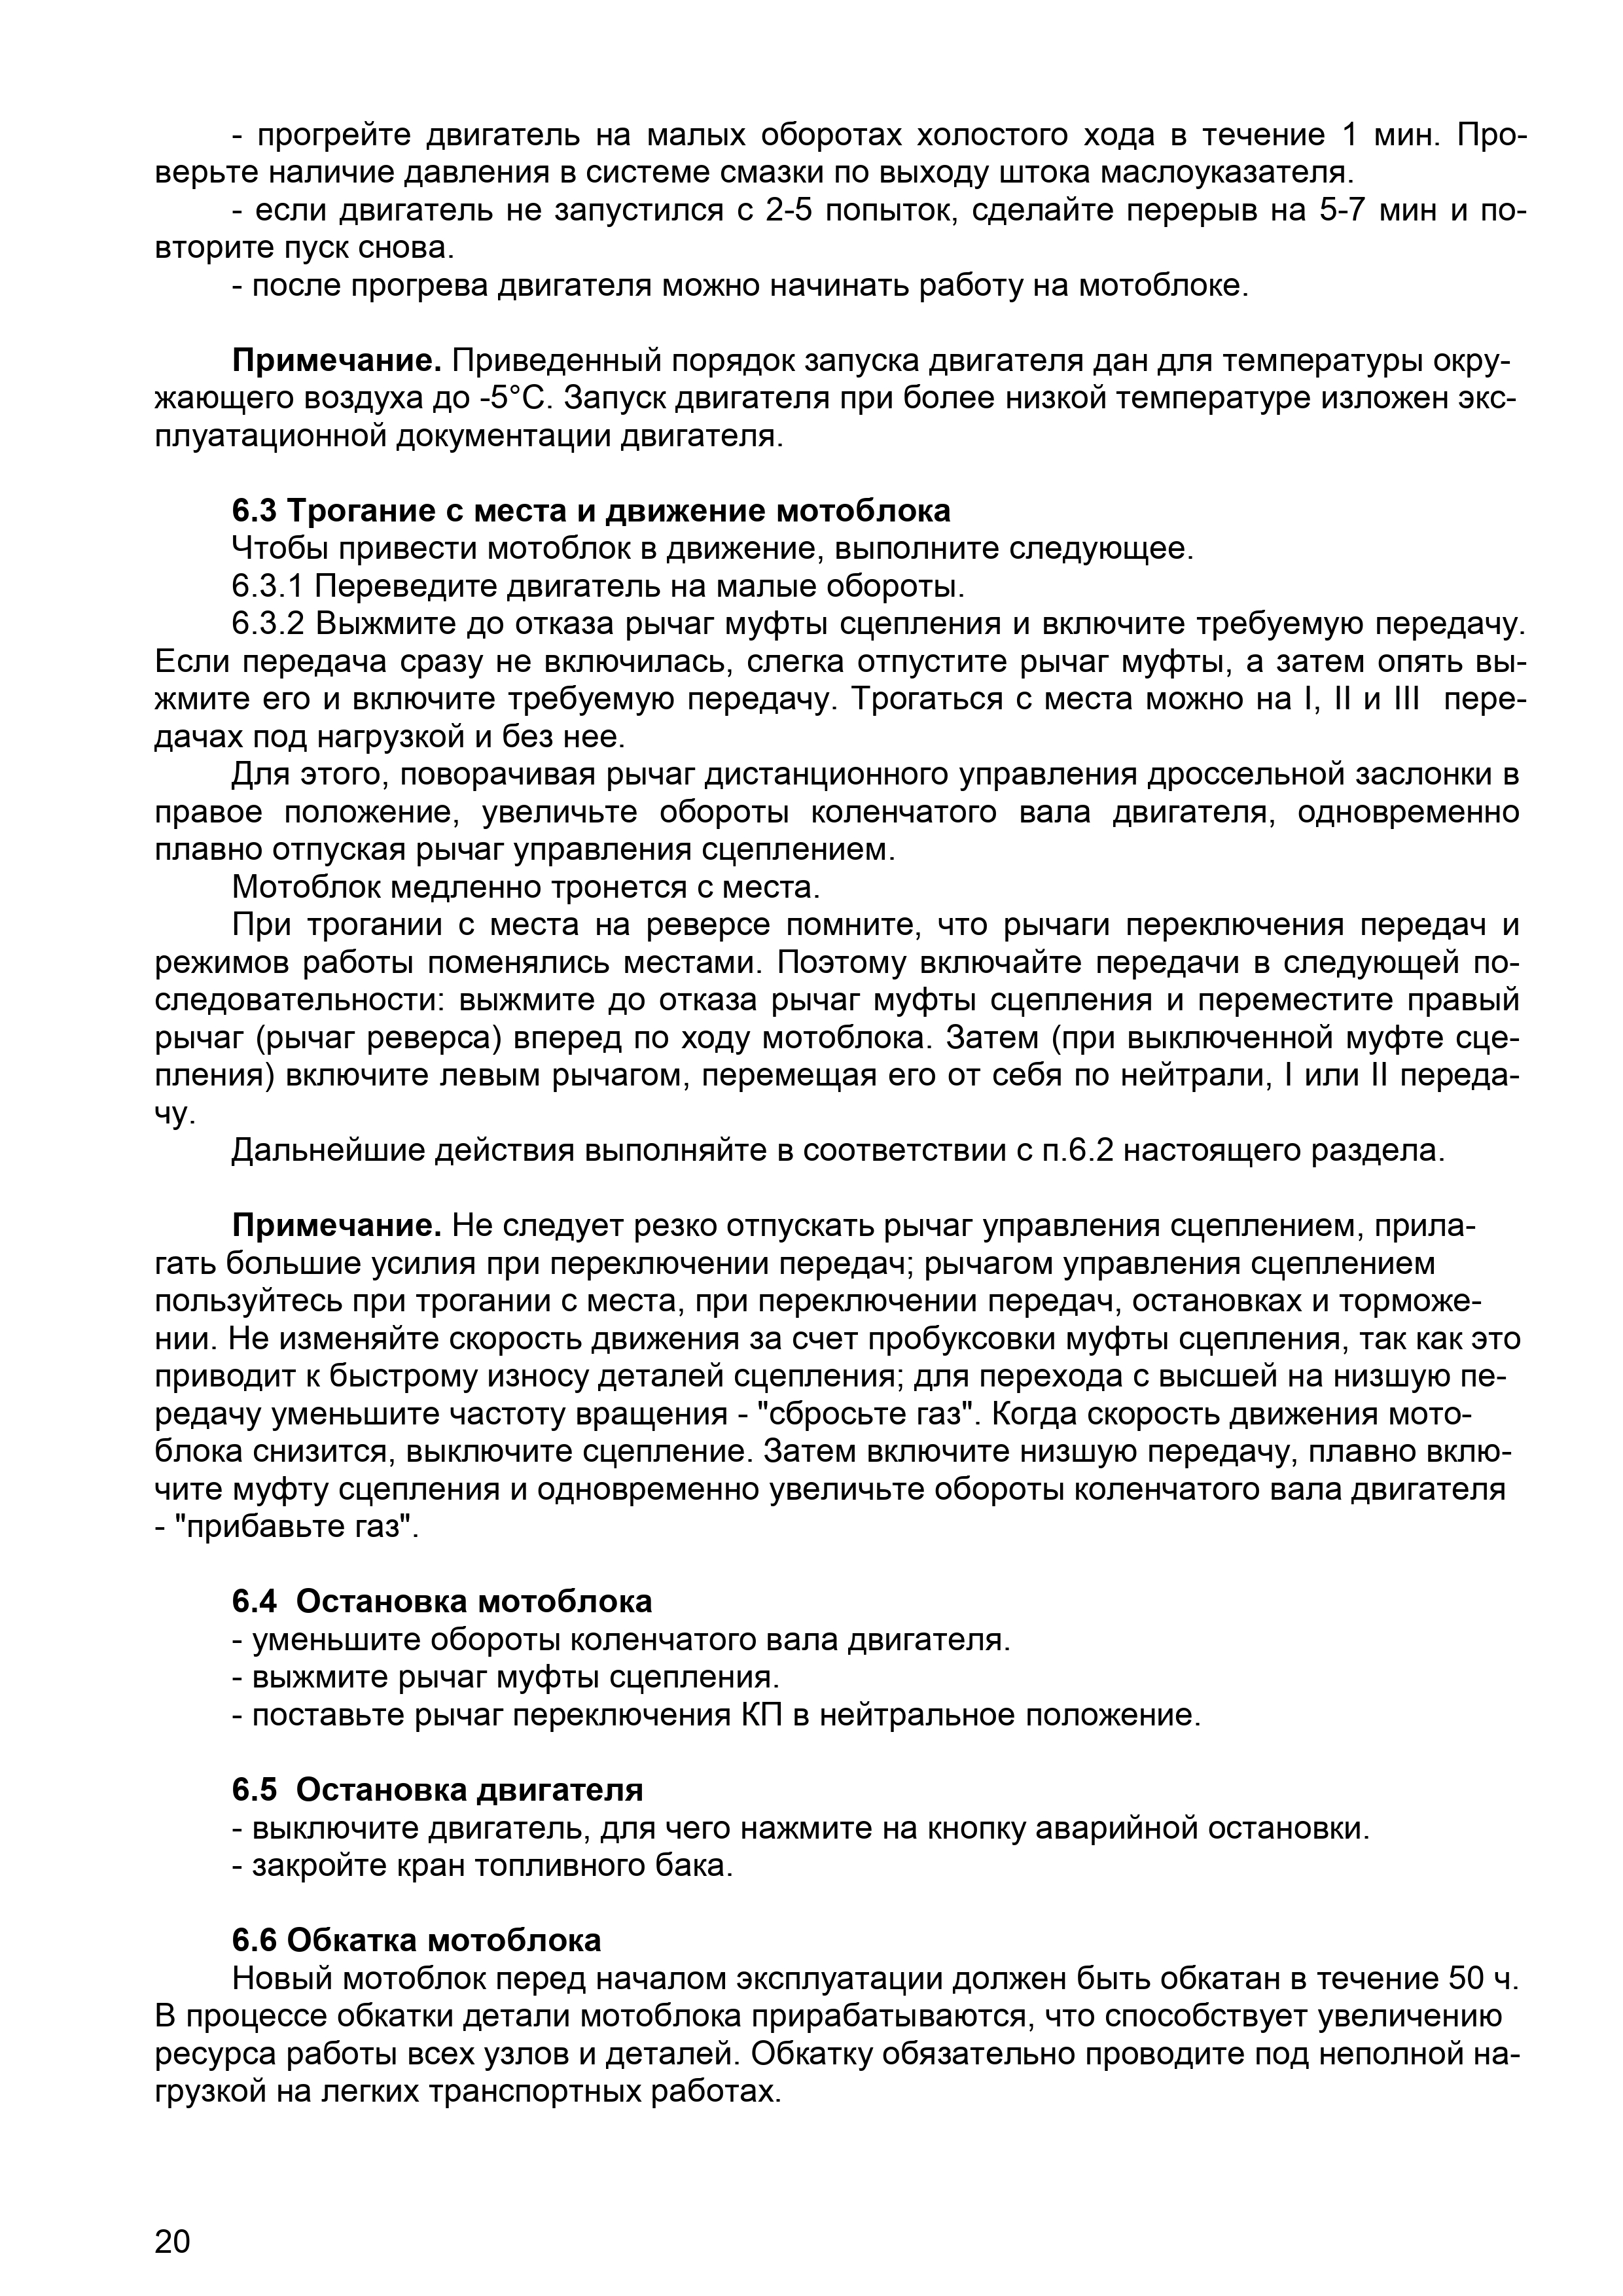 belarus_09h_manual i catalog (1)_page-0020